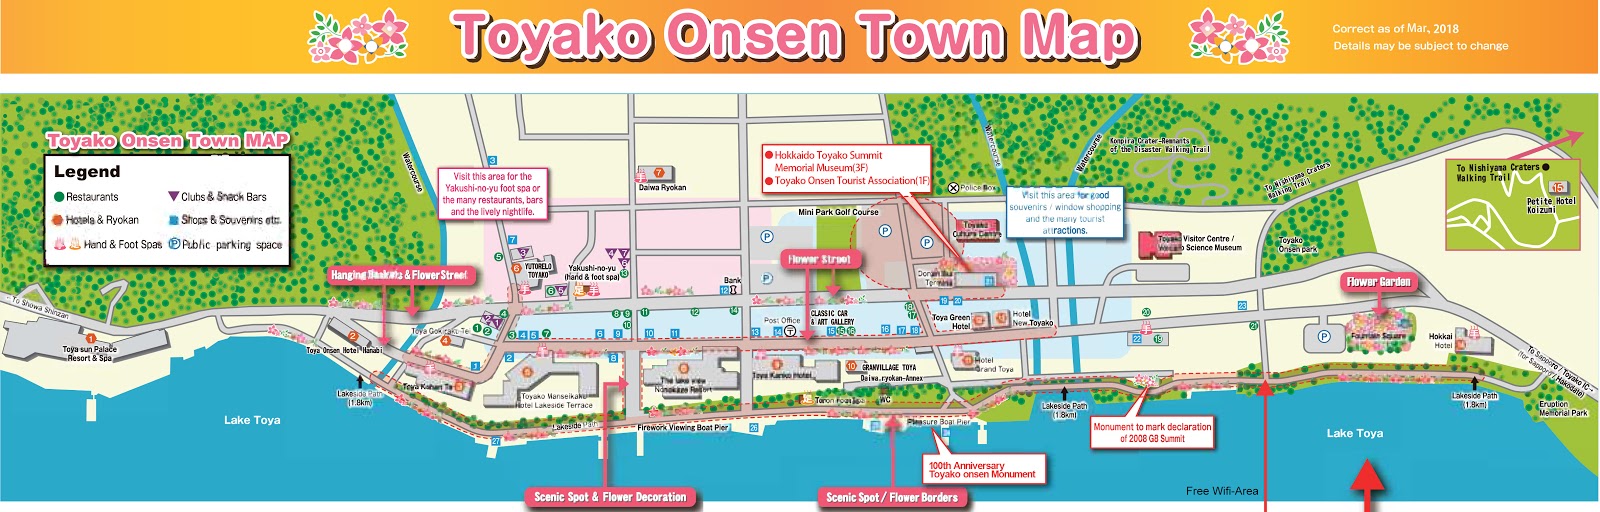 Donan Bus English Timetable Between Lake Toya / Toyako Onsen and Toya Station - Hokkaido, Japan ...